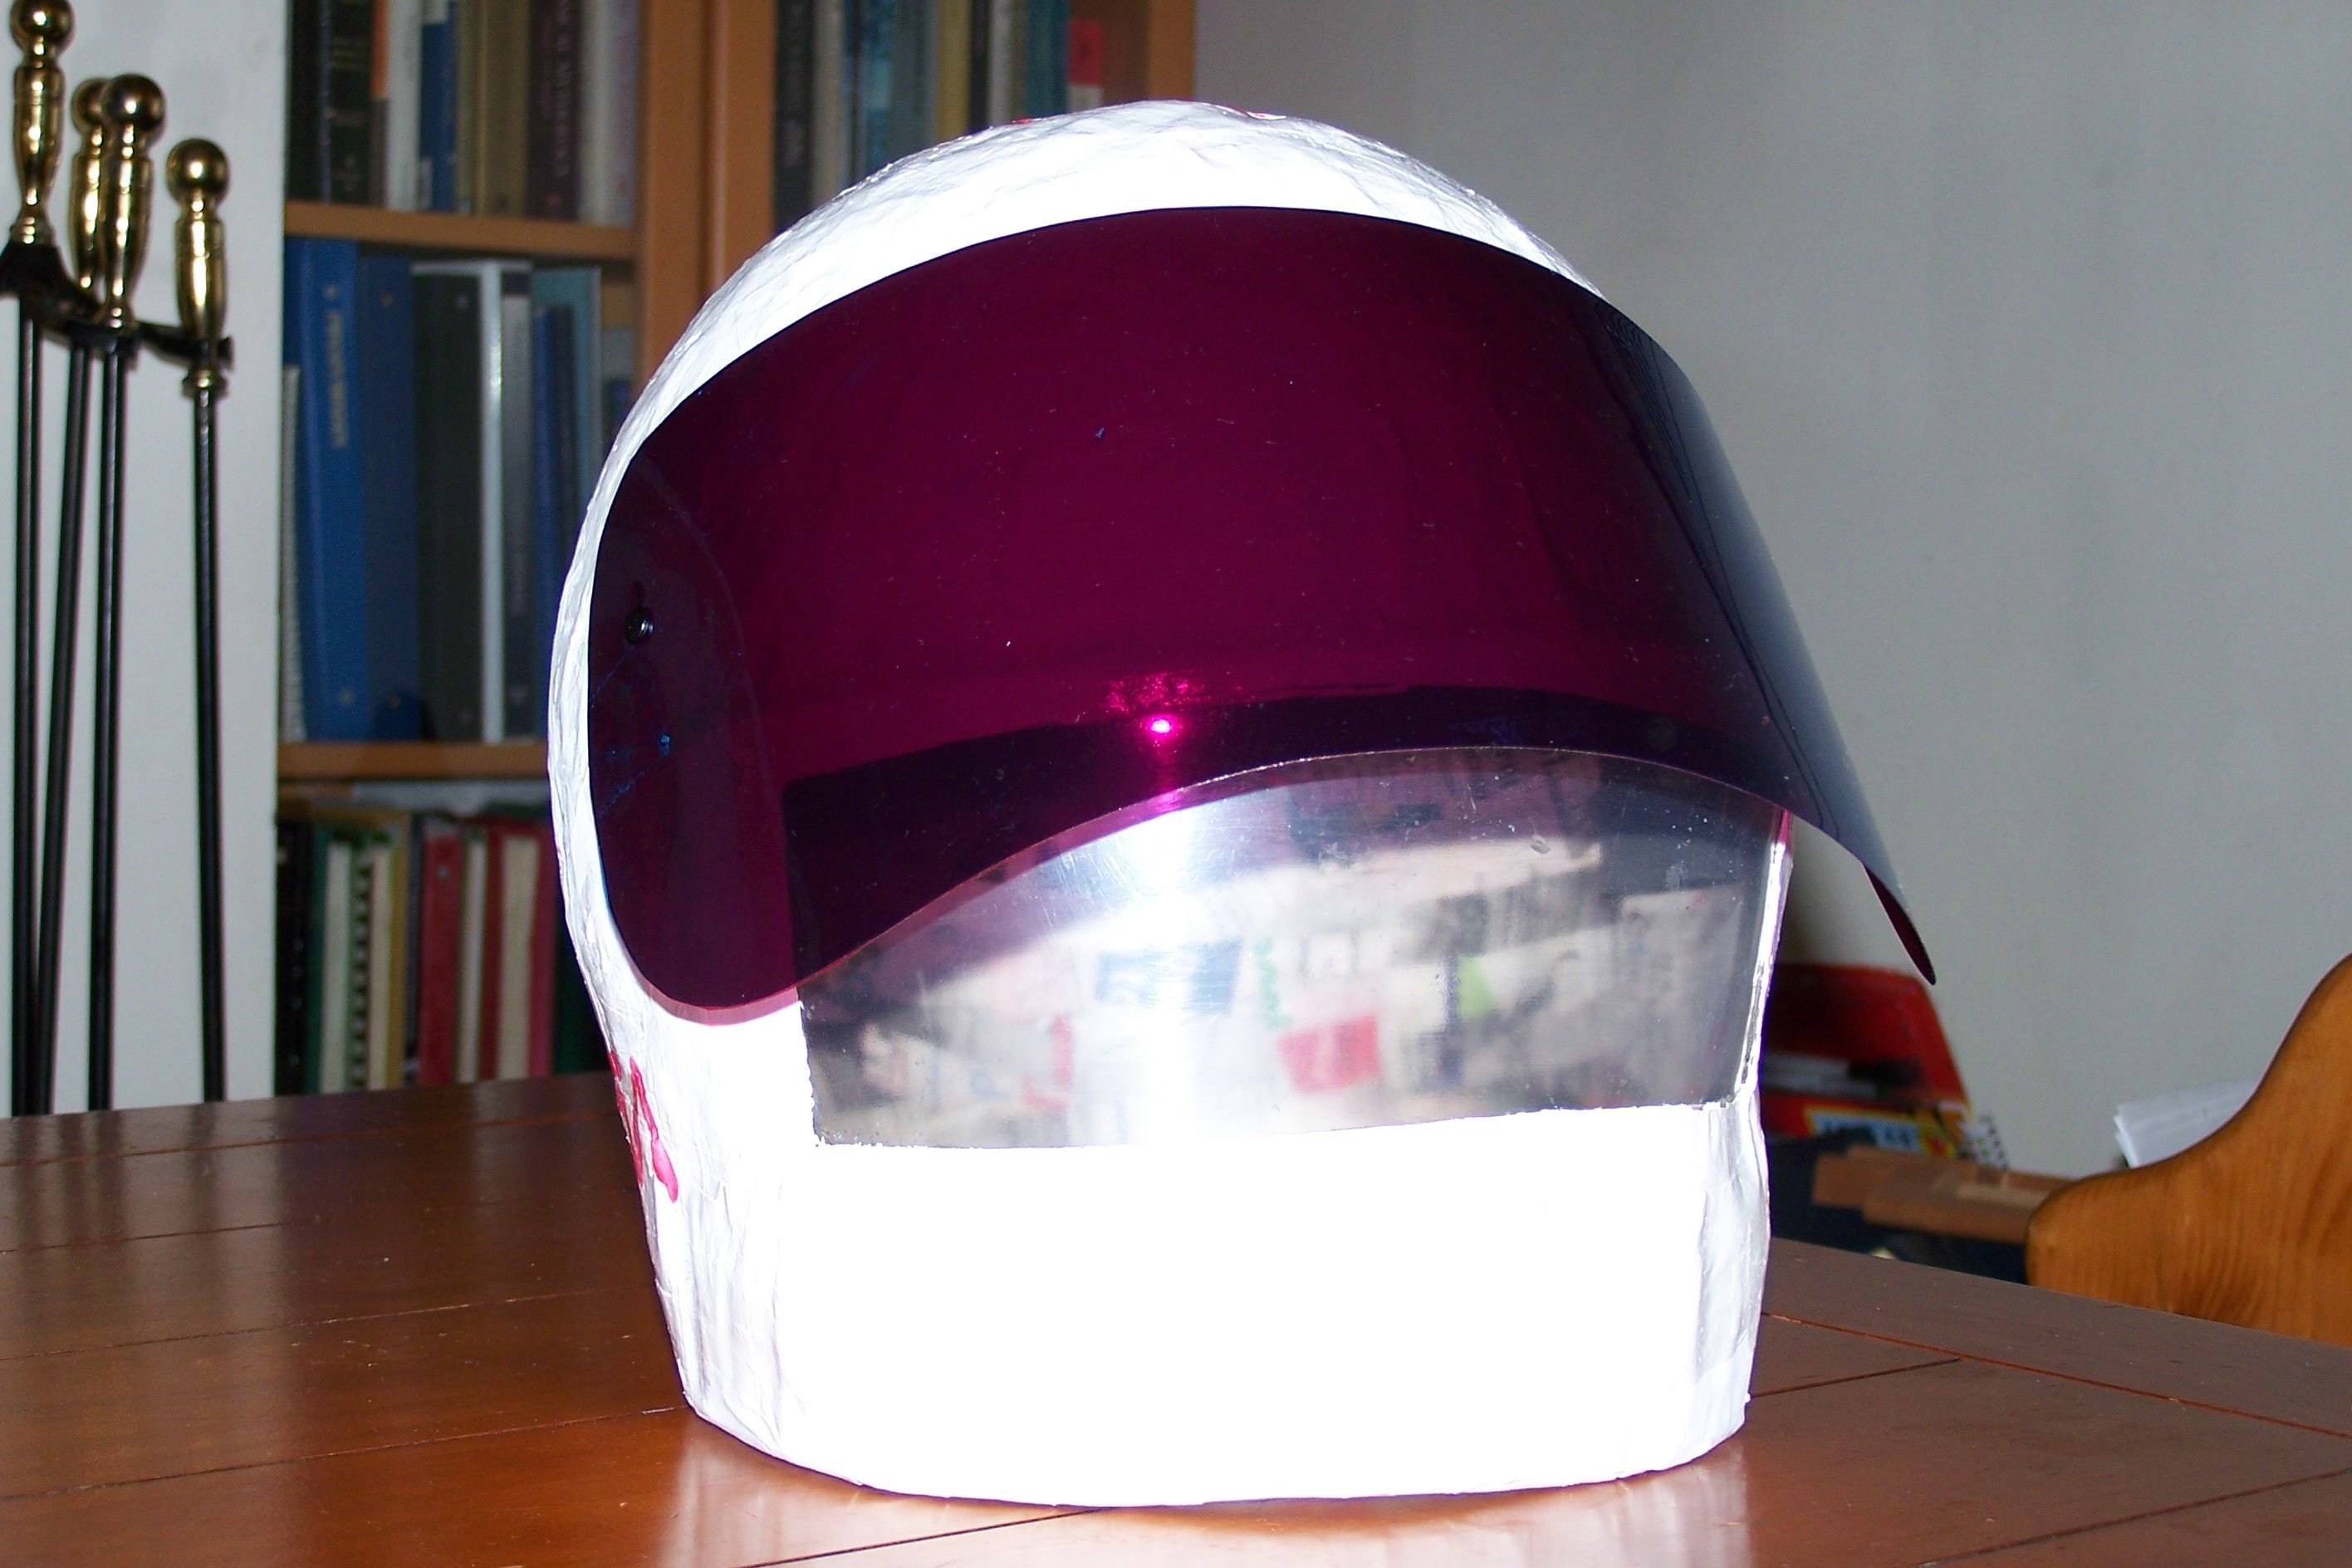 Best ideas about DIY Astronaut Helmet
. Save or Pin How to Make an Astronaut Helmet Teach Now.